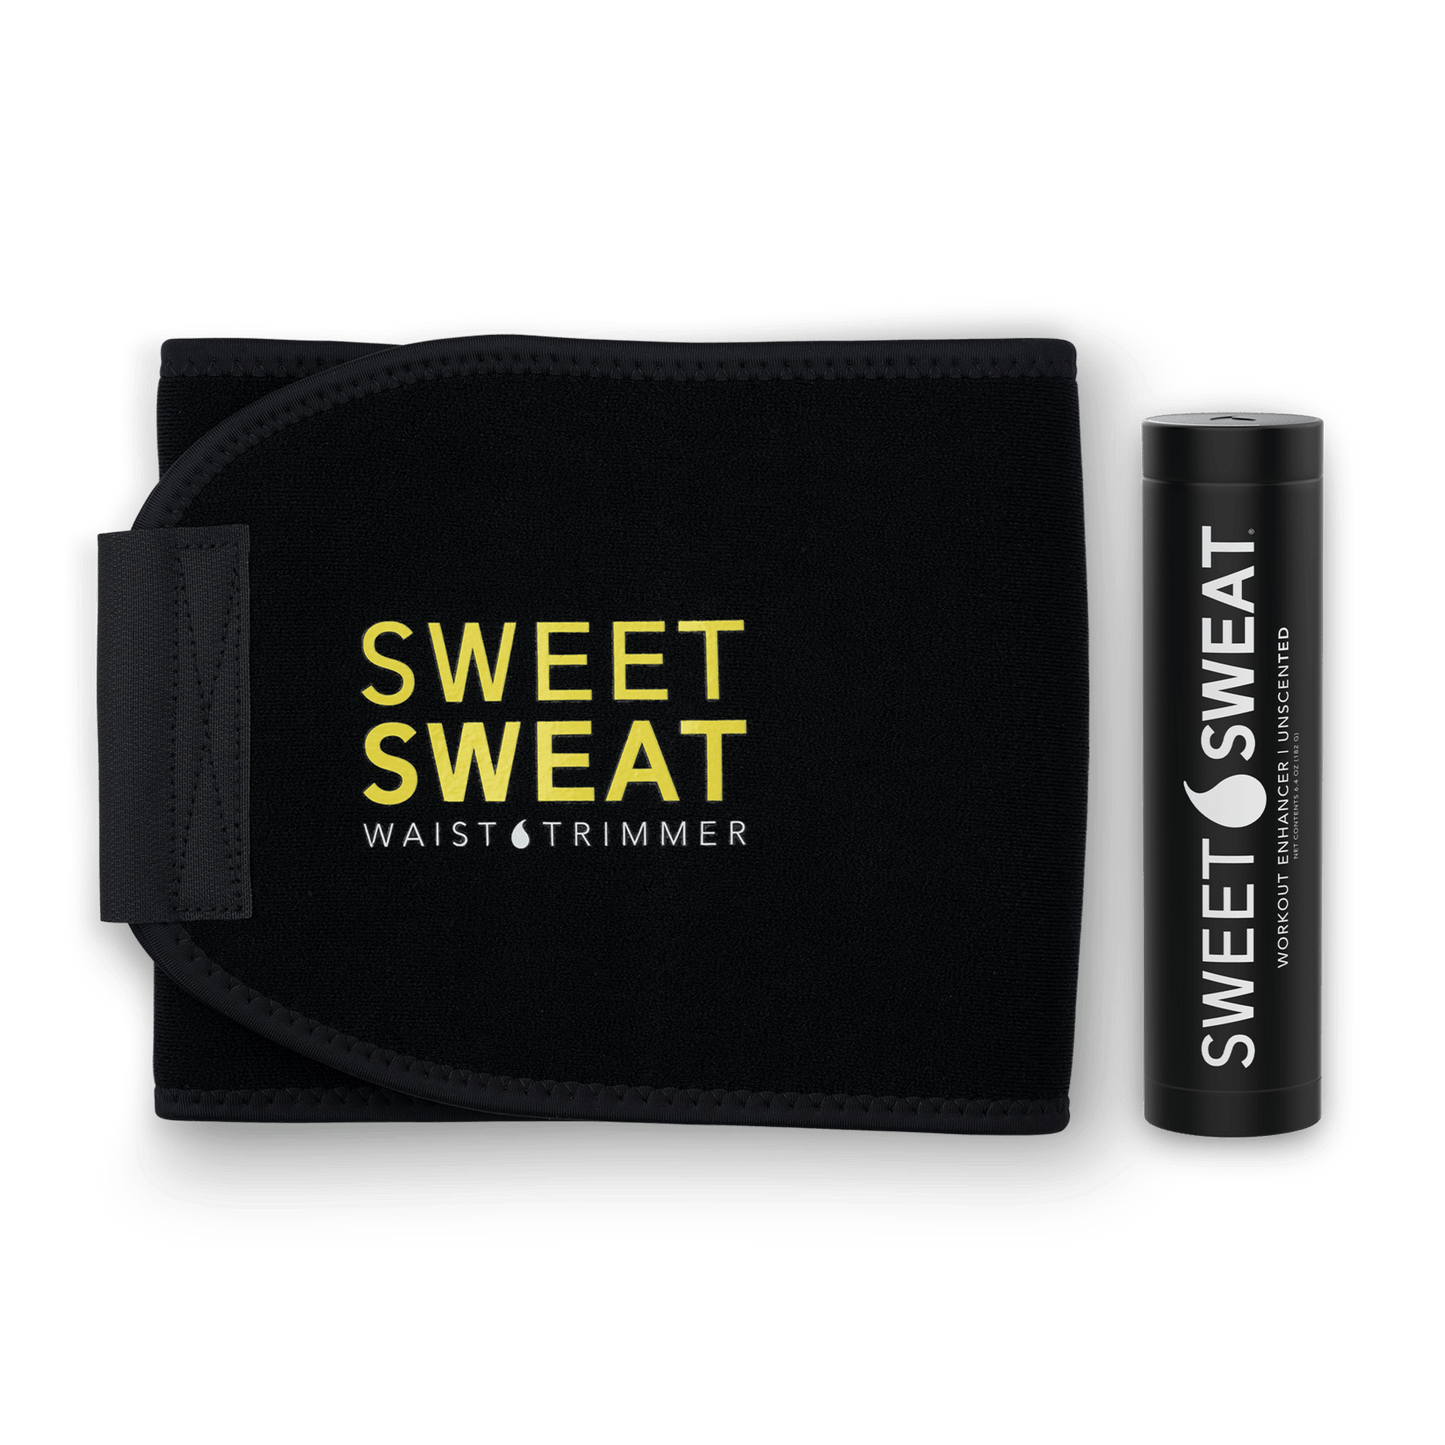 Sweet Sweat® workout kit.